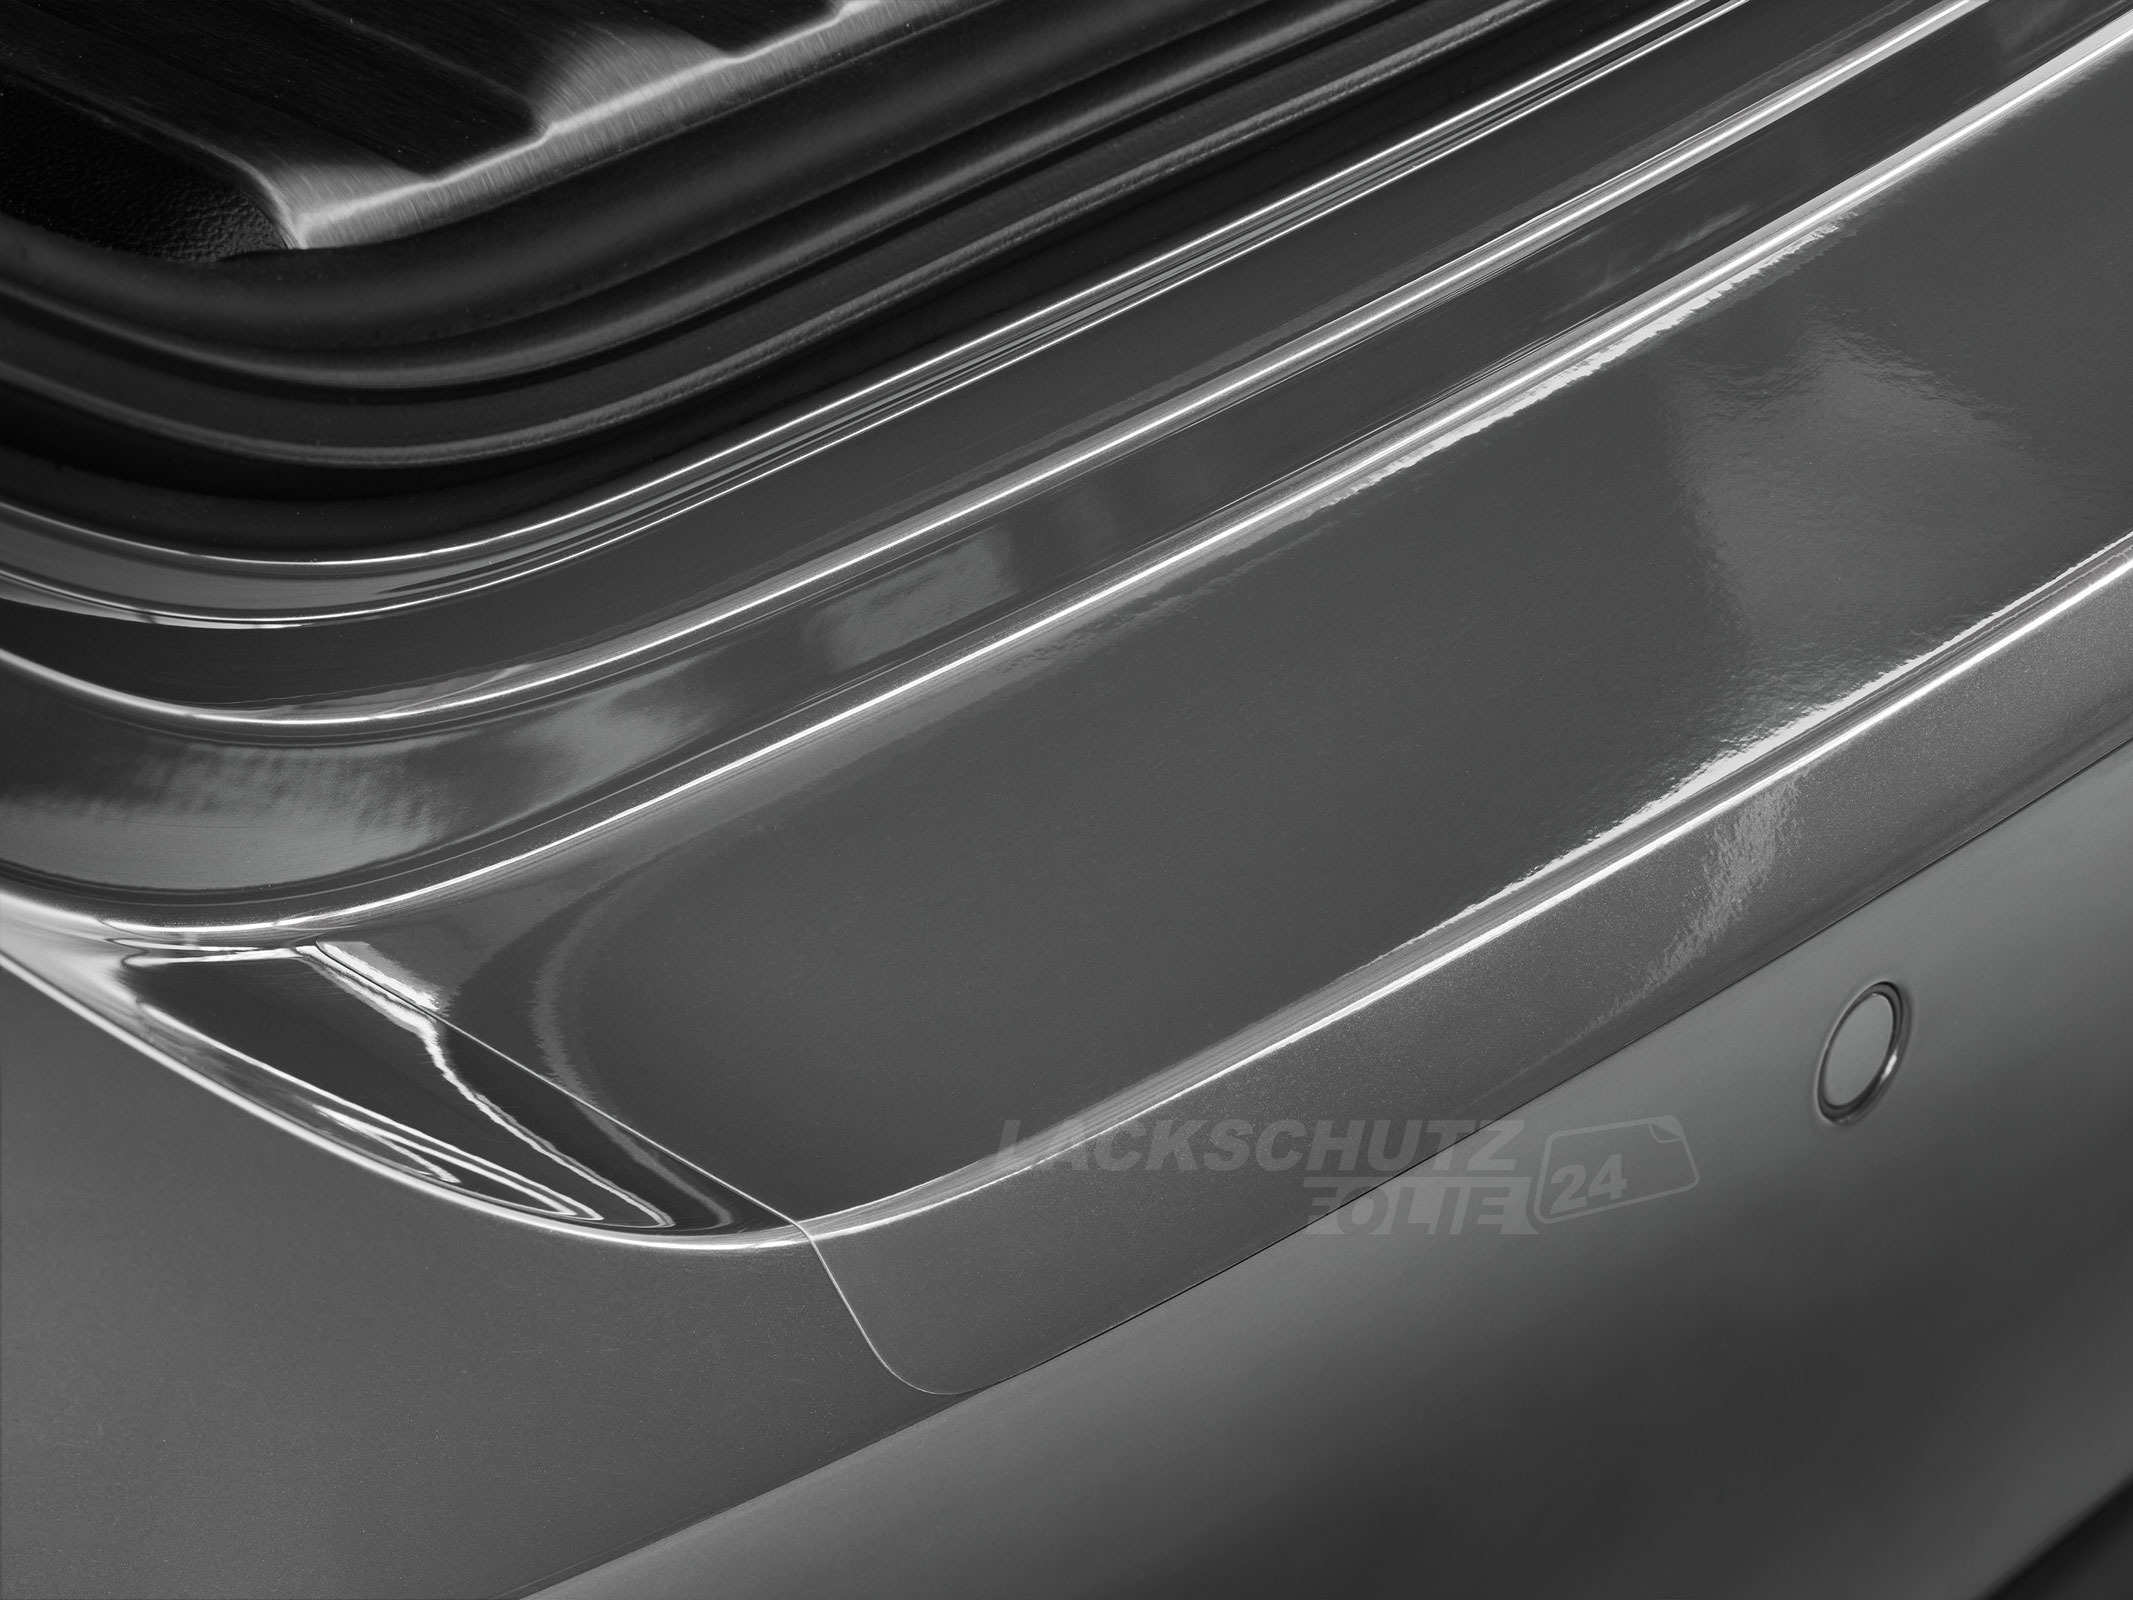 Ladekantenschutzfolie - Transparent Glatt Hochglänzend 150 µm stark für Dacia Lodgy ab BJ 05/2012